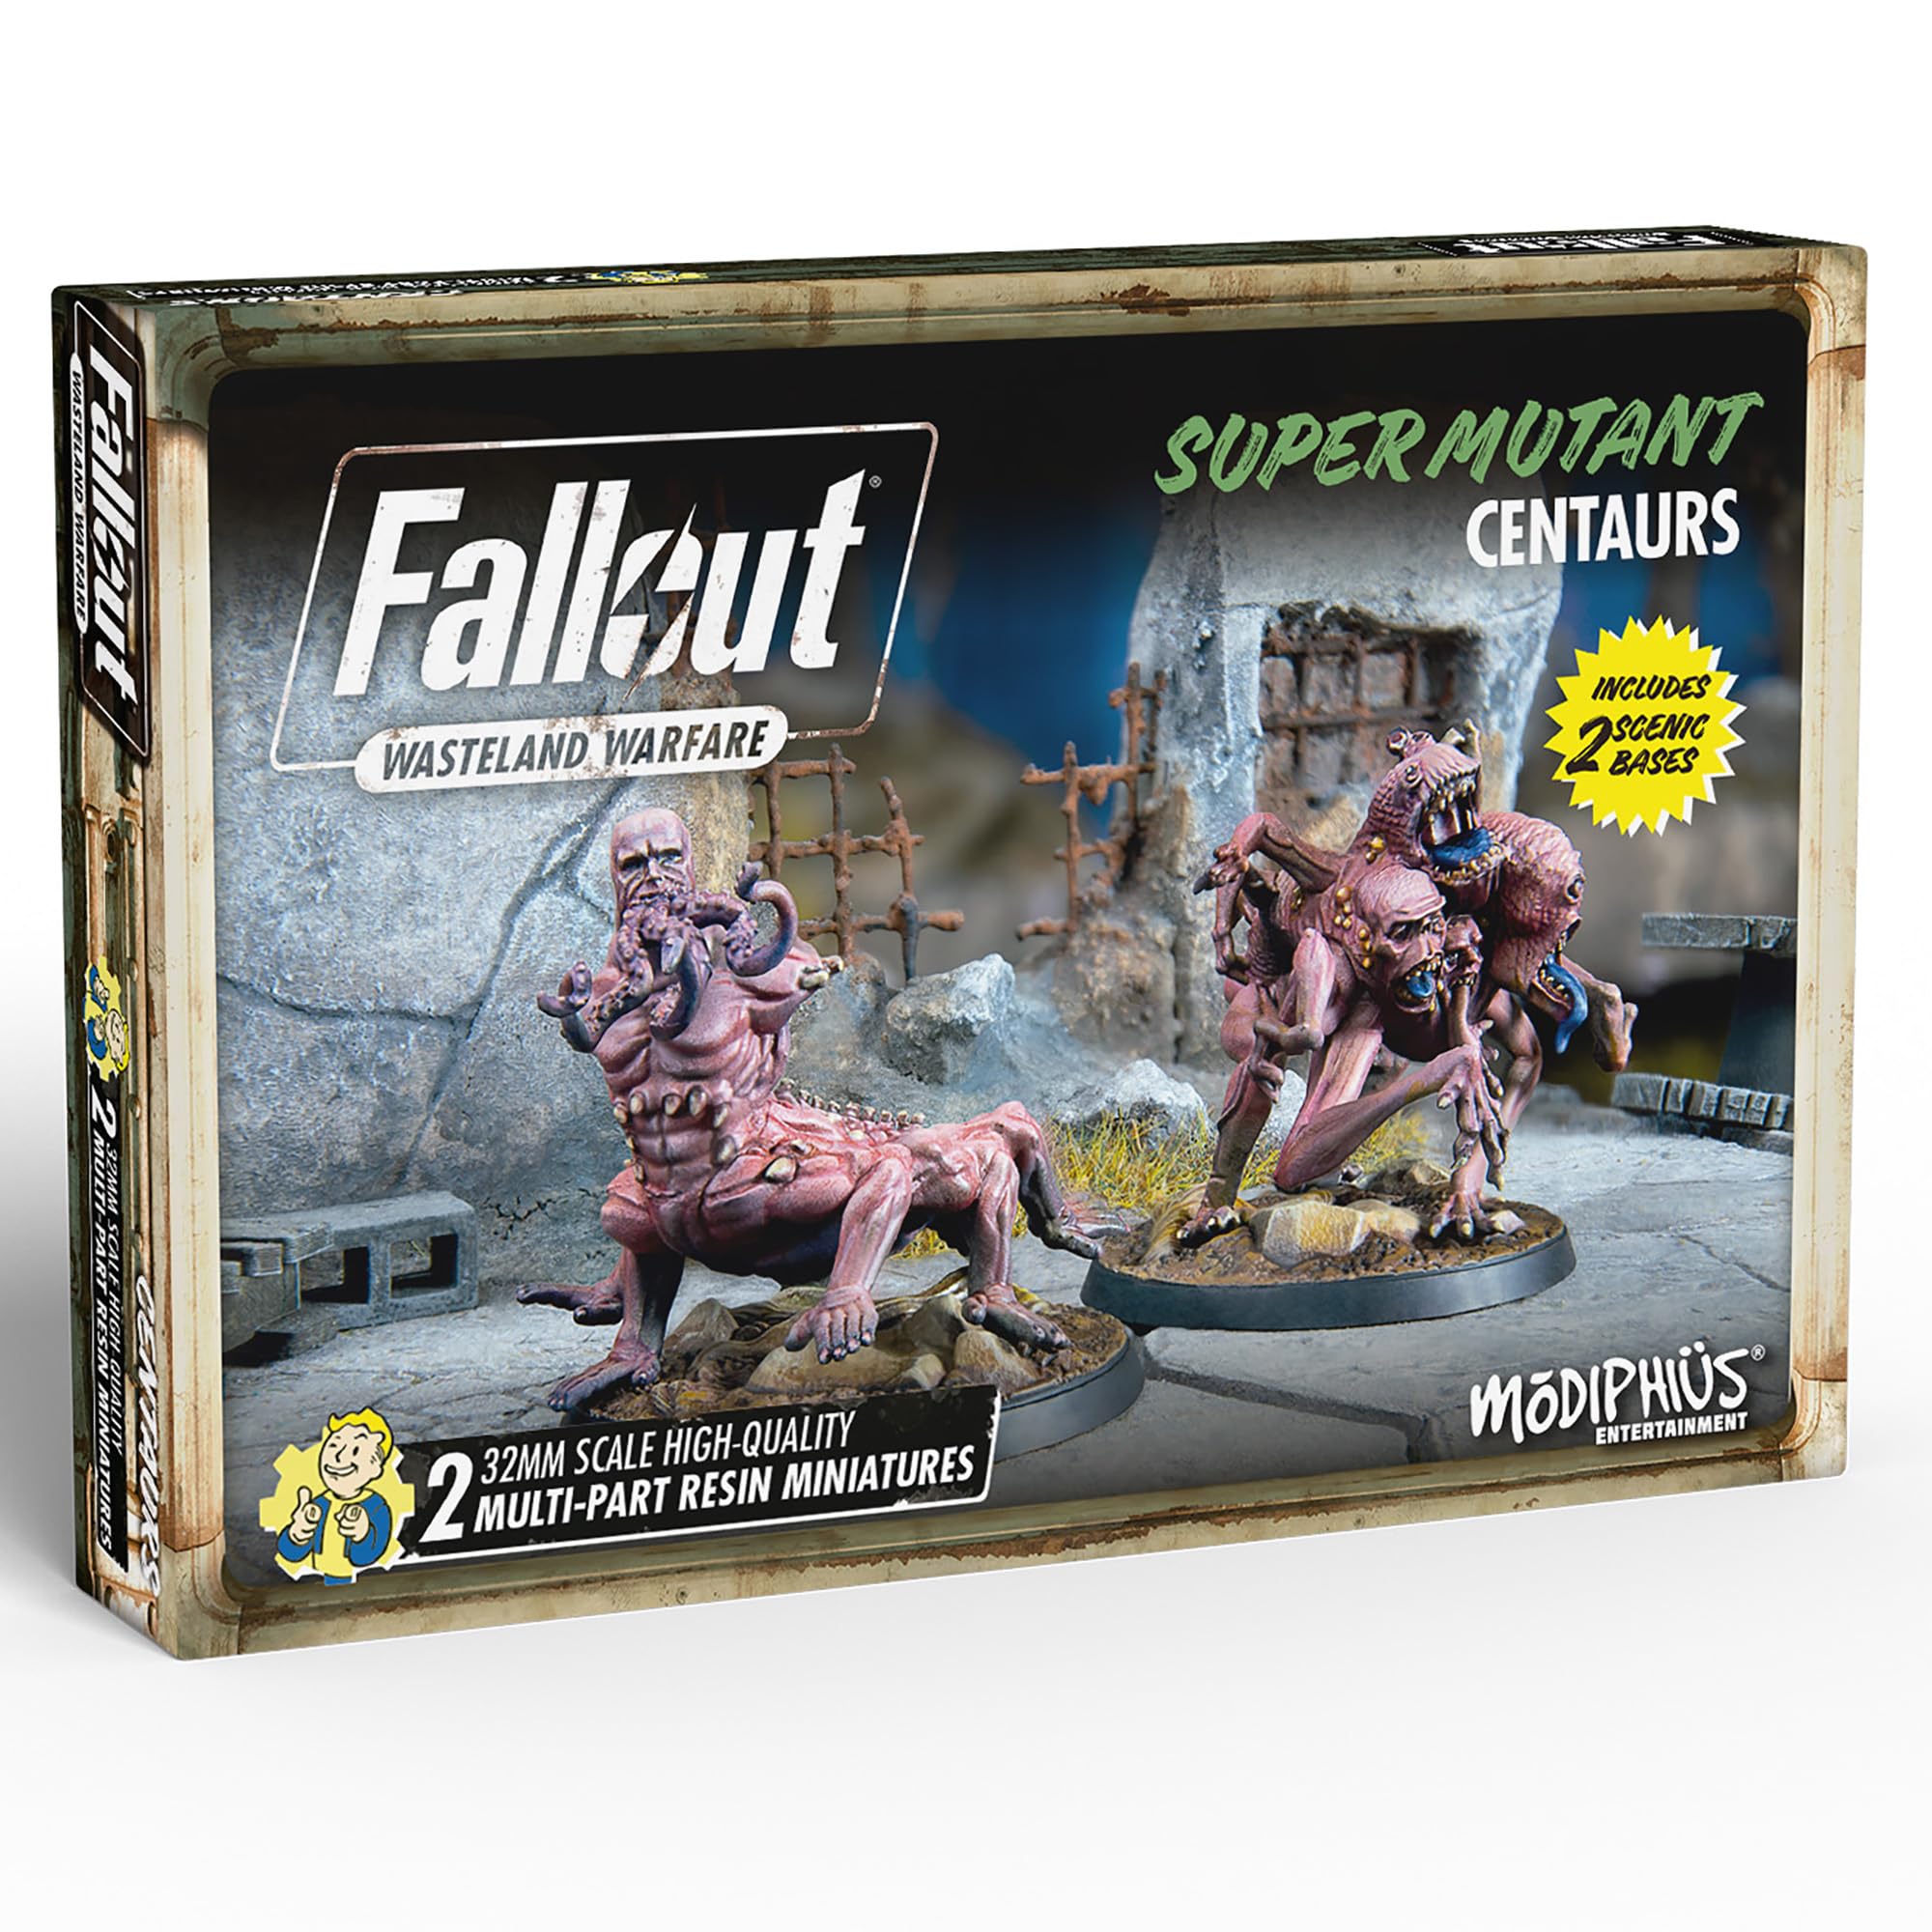 Modiphius Fallout Wasteland Warfare Super Mutants Centaurs